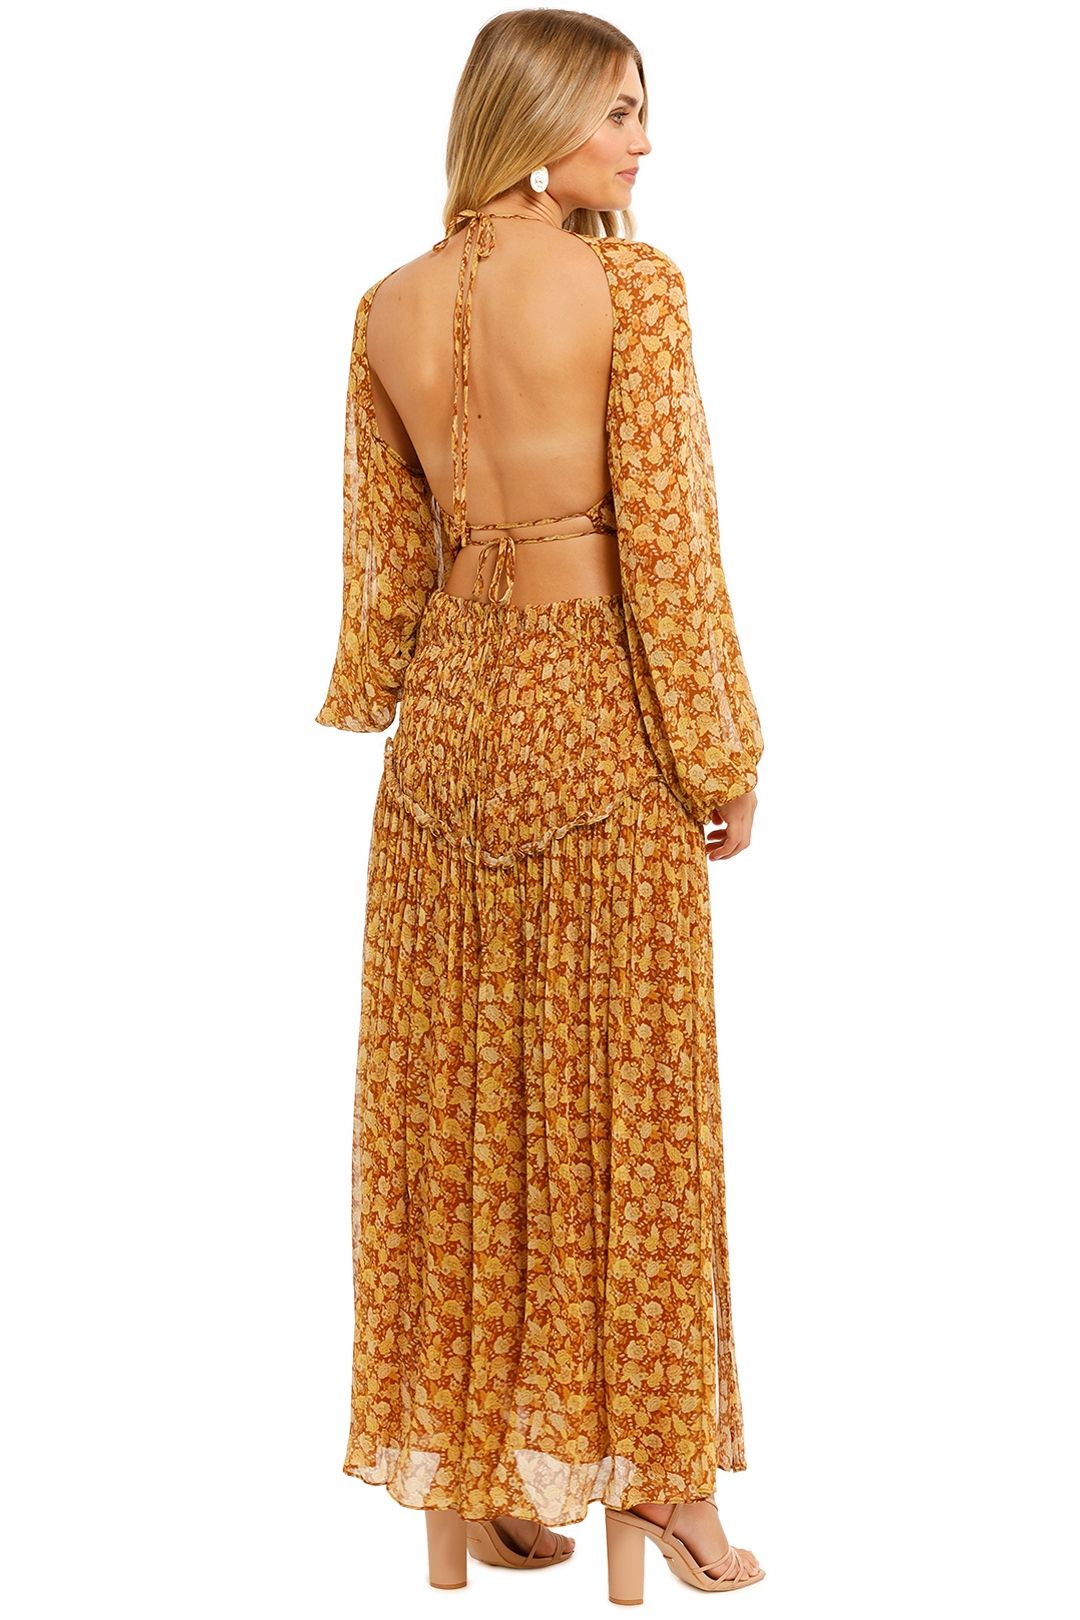 Shona Joy Sunset Cut Out Midi Dress Tumeric backless